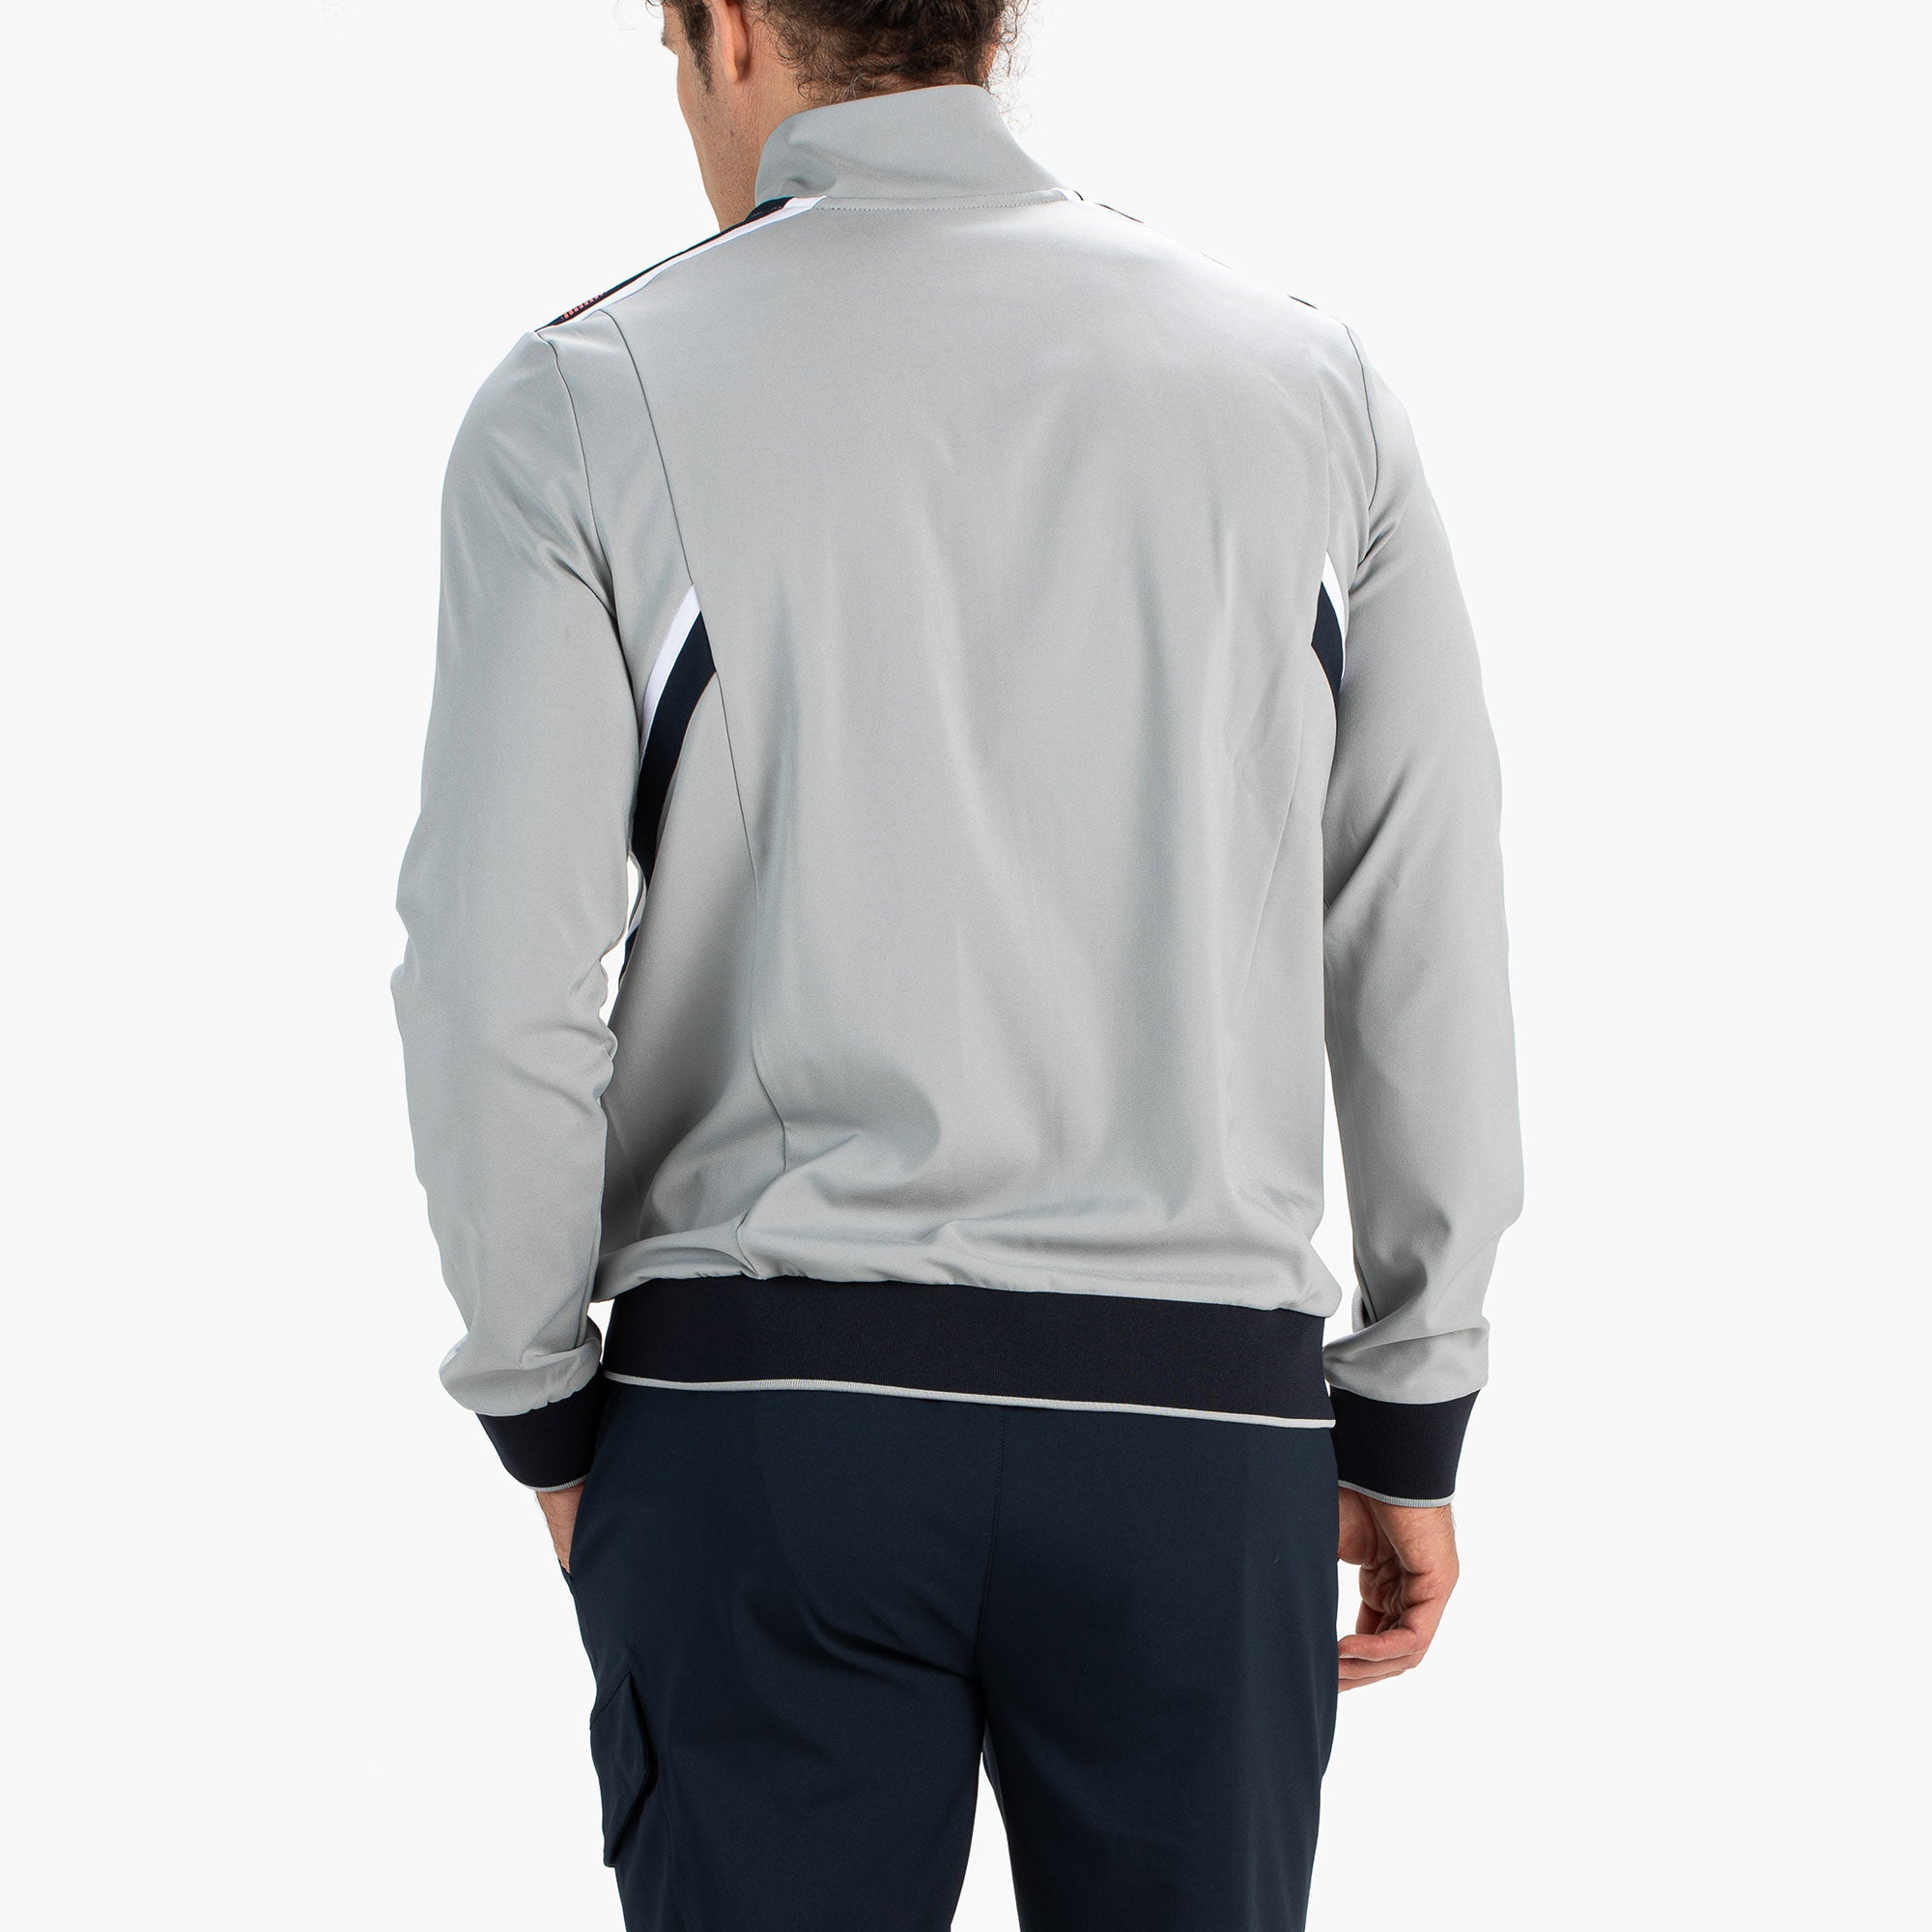 Sjeng Sports Adam Men's Tennis Jacket Grey (2)